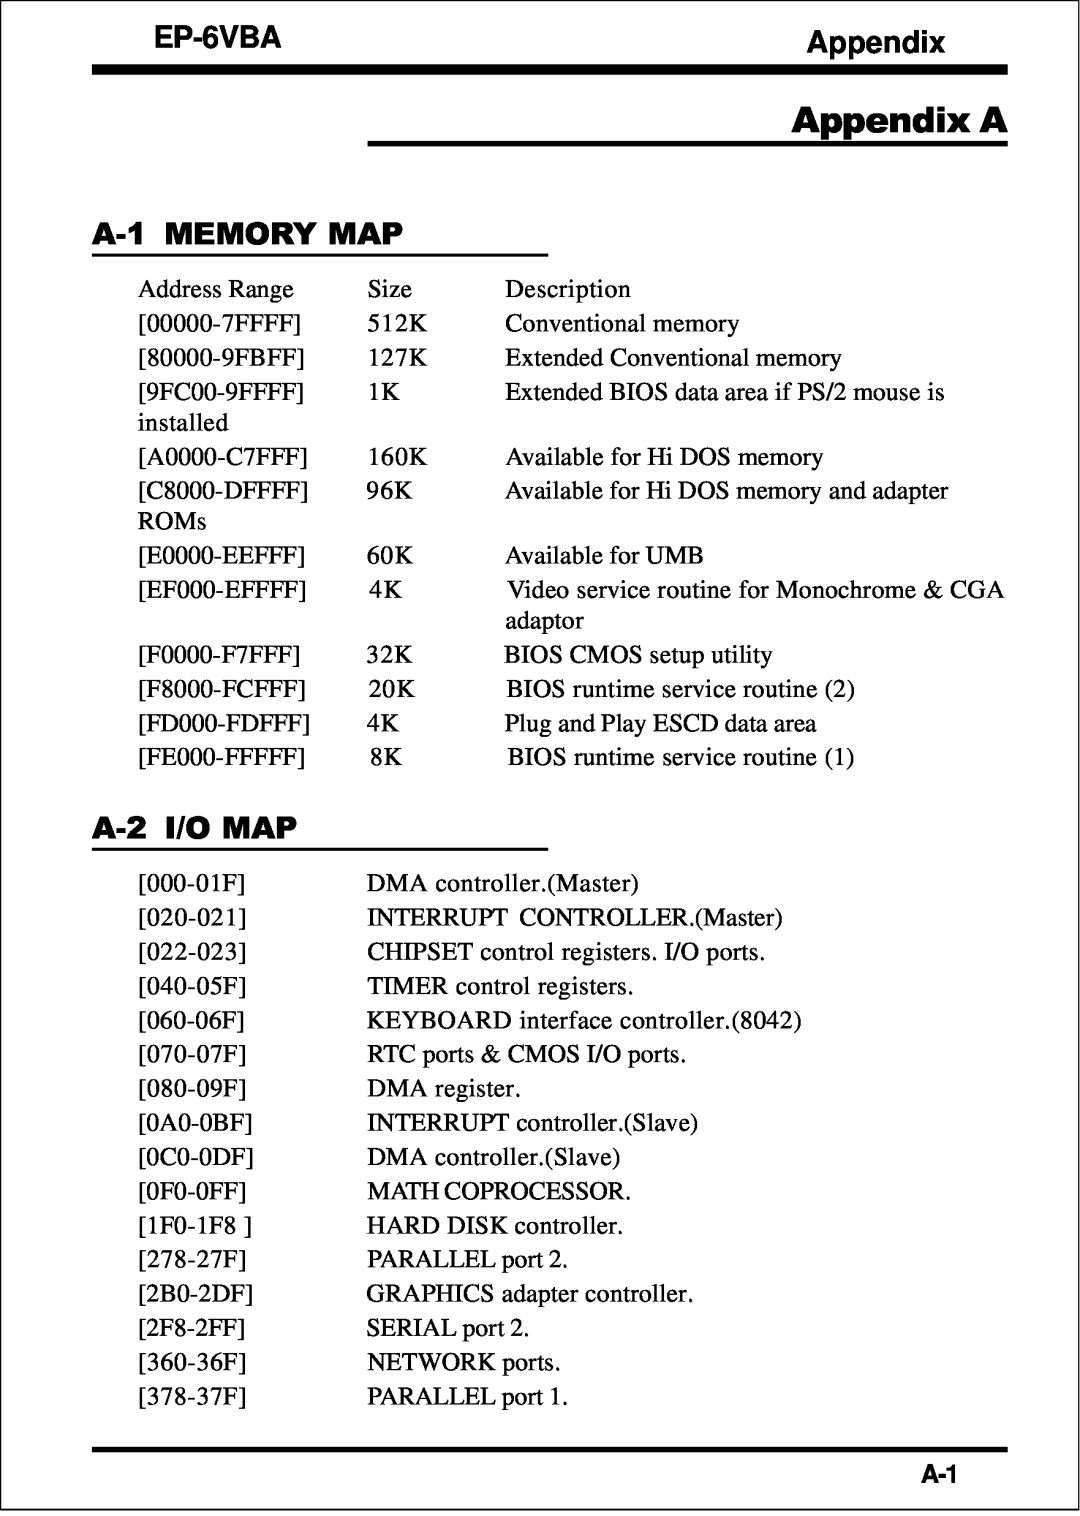 EPoX Computer EP-6VBA specifications Appendix A, A-1 MEMORY MAP, A-2 I/O MAP 